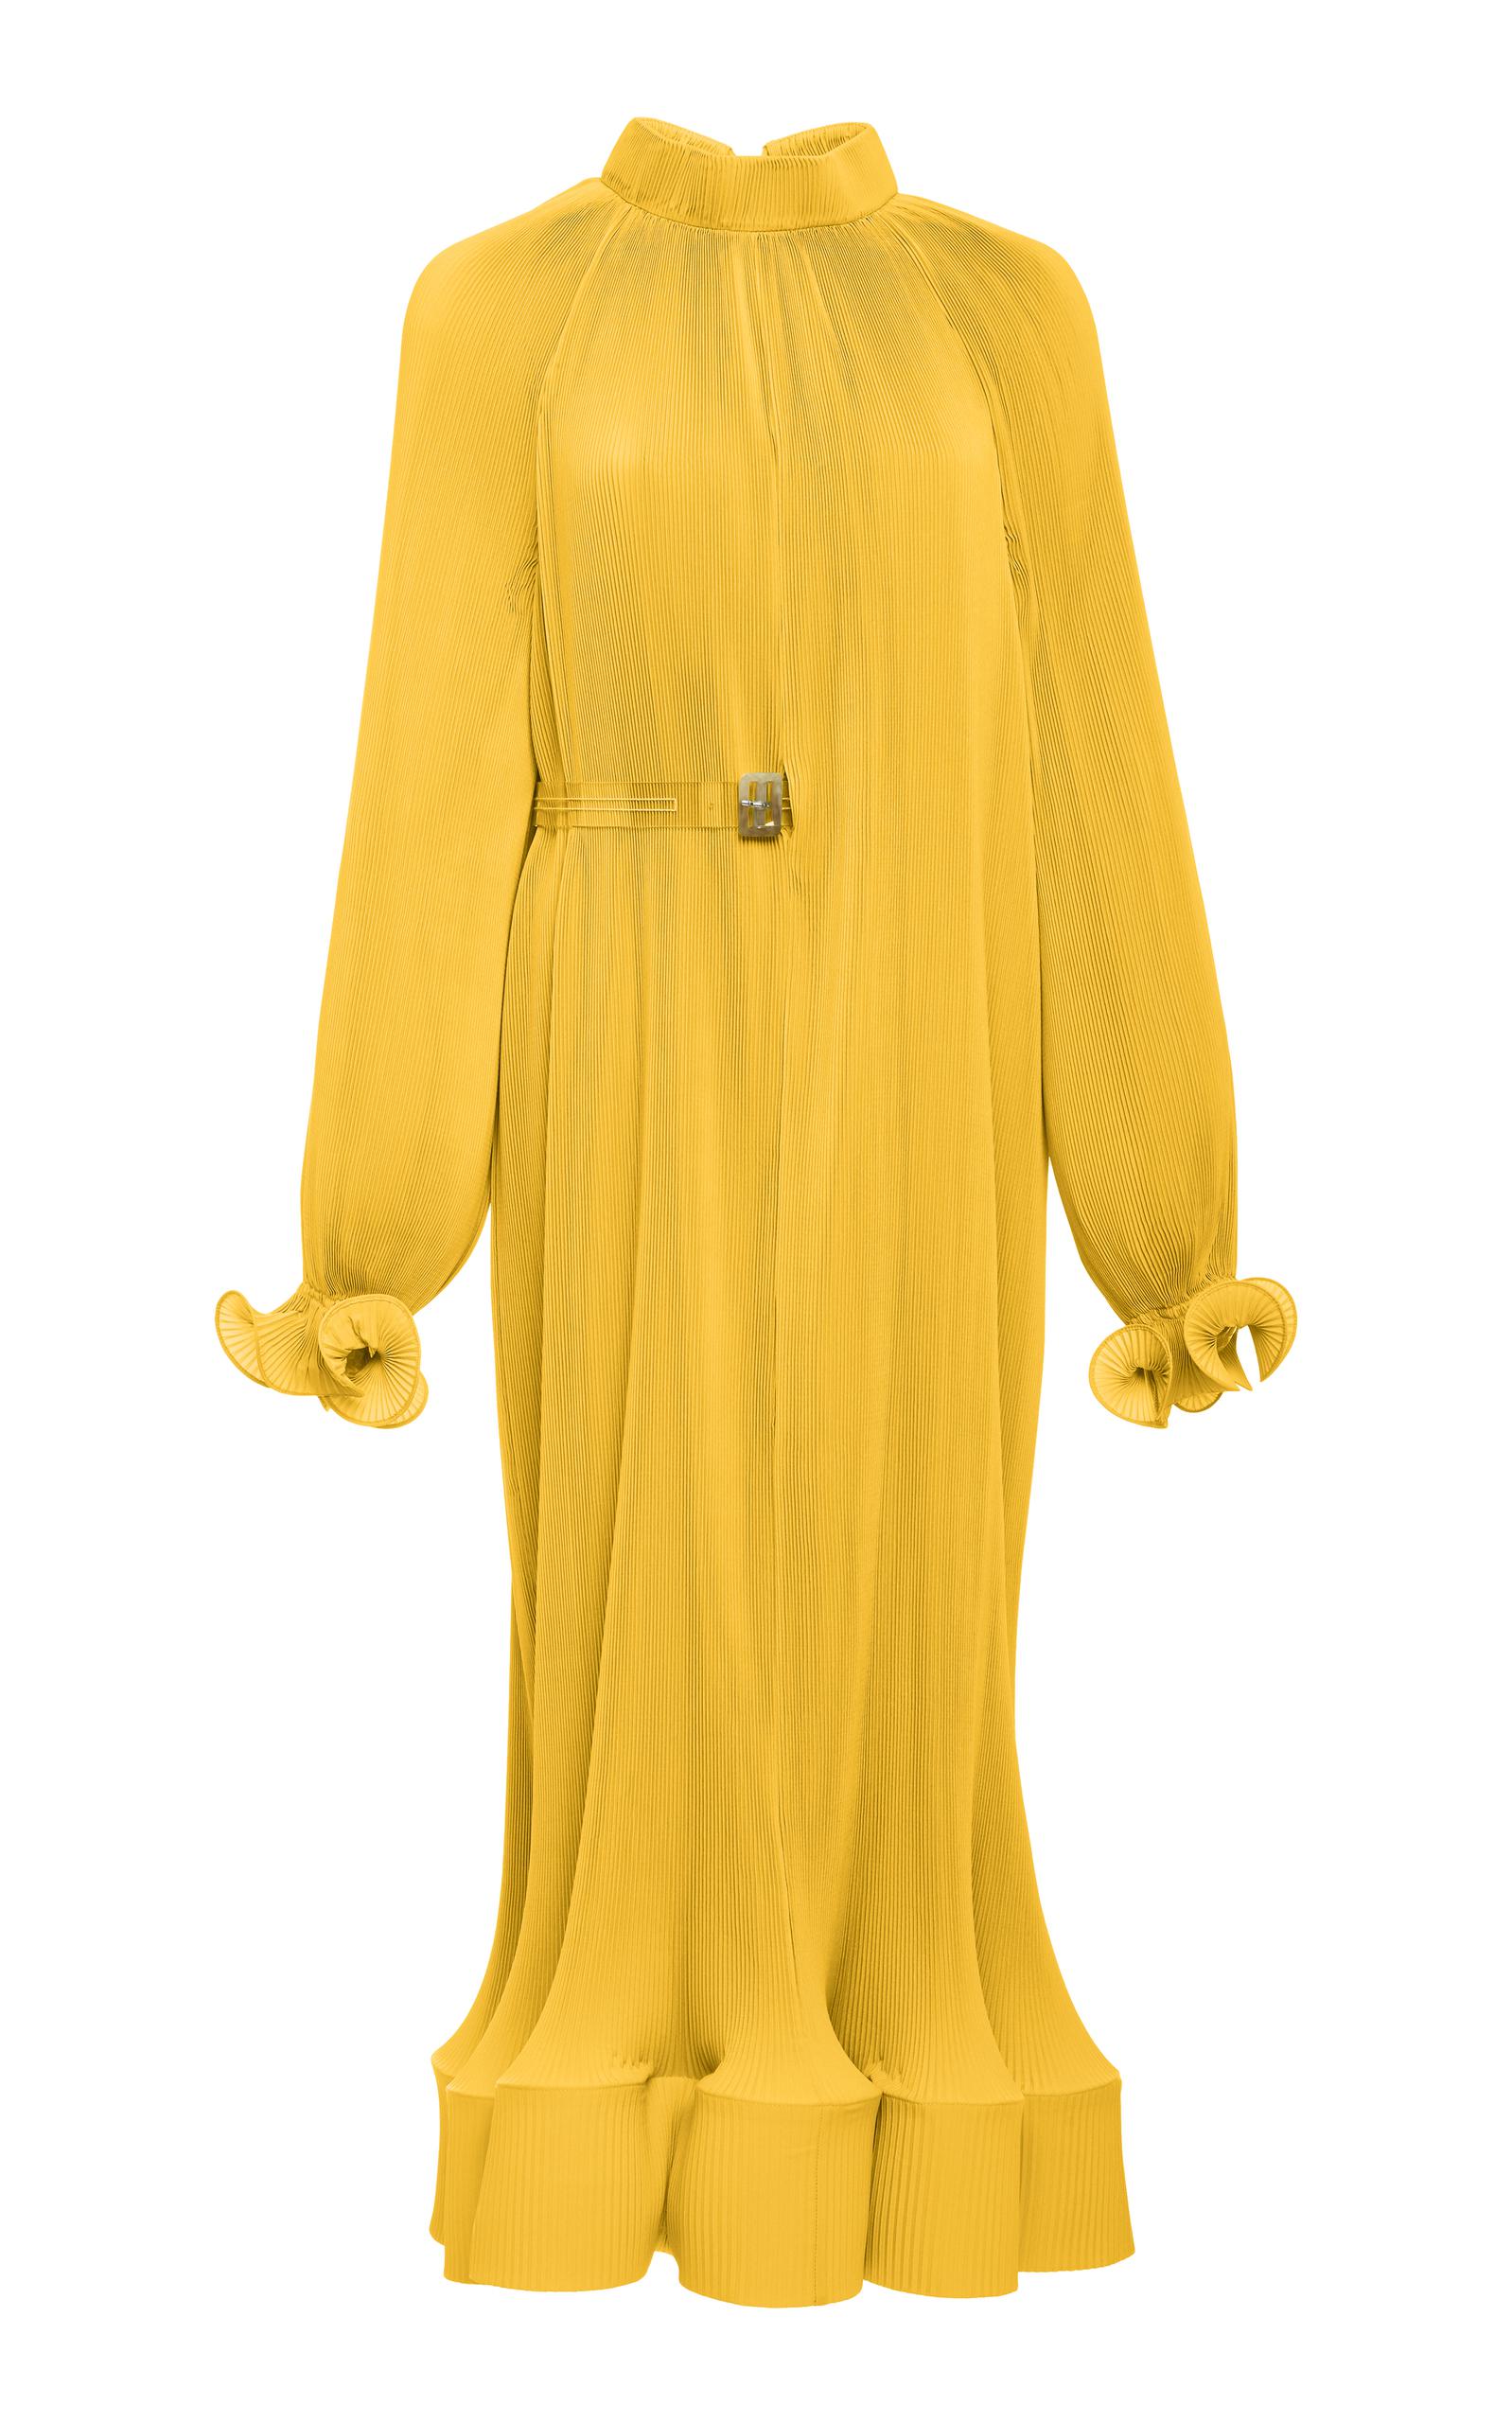 Lyst - Tibi Long Sleeve Pleated Dress in Yellow